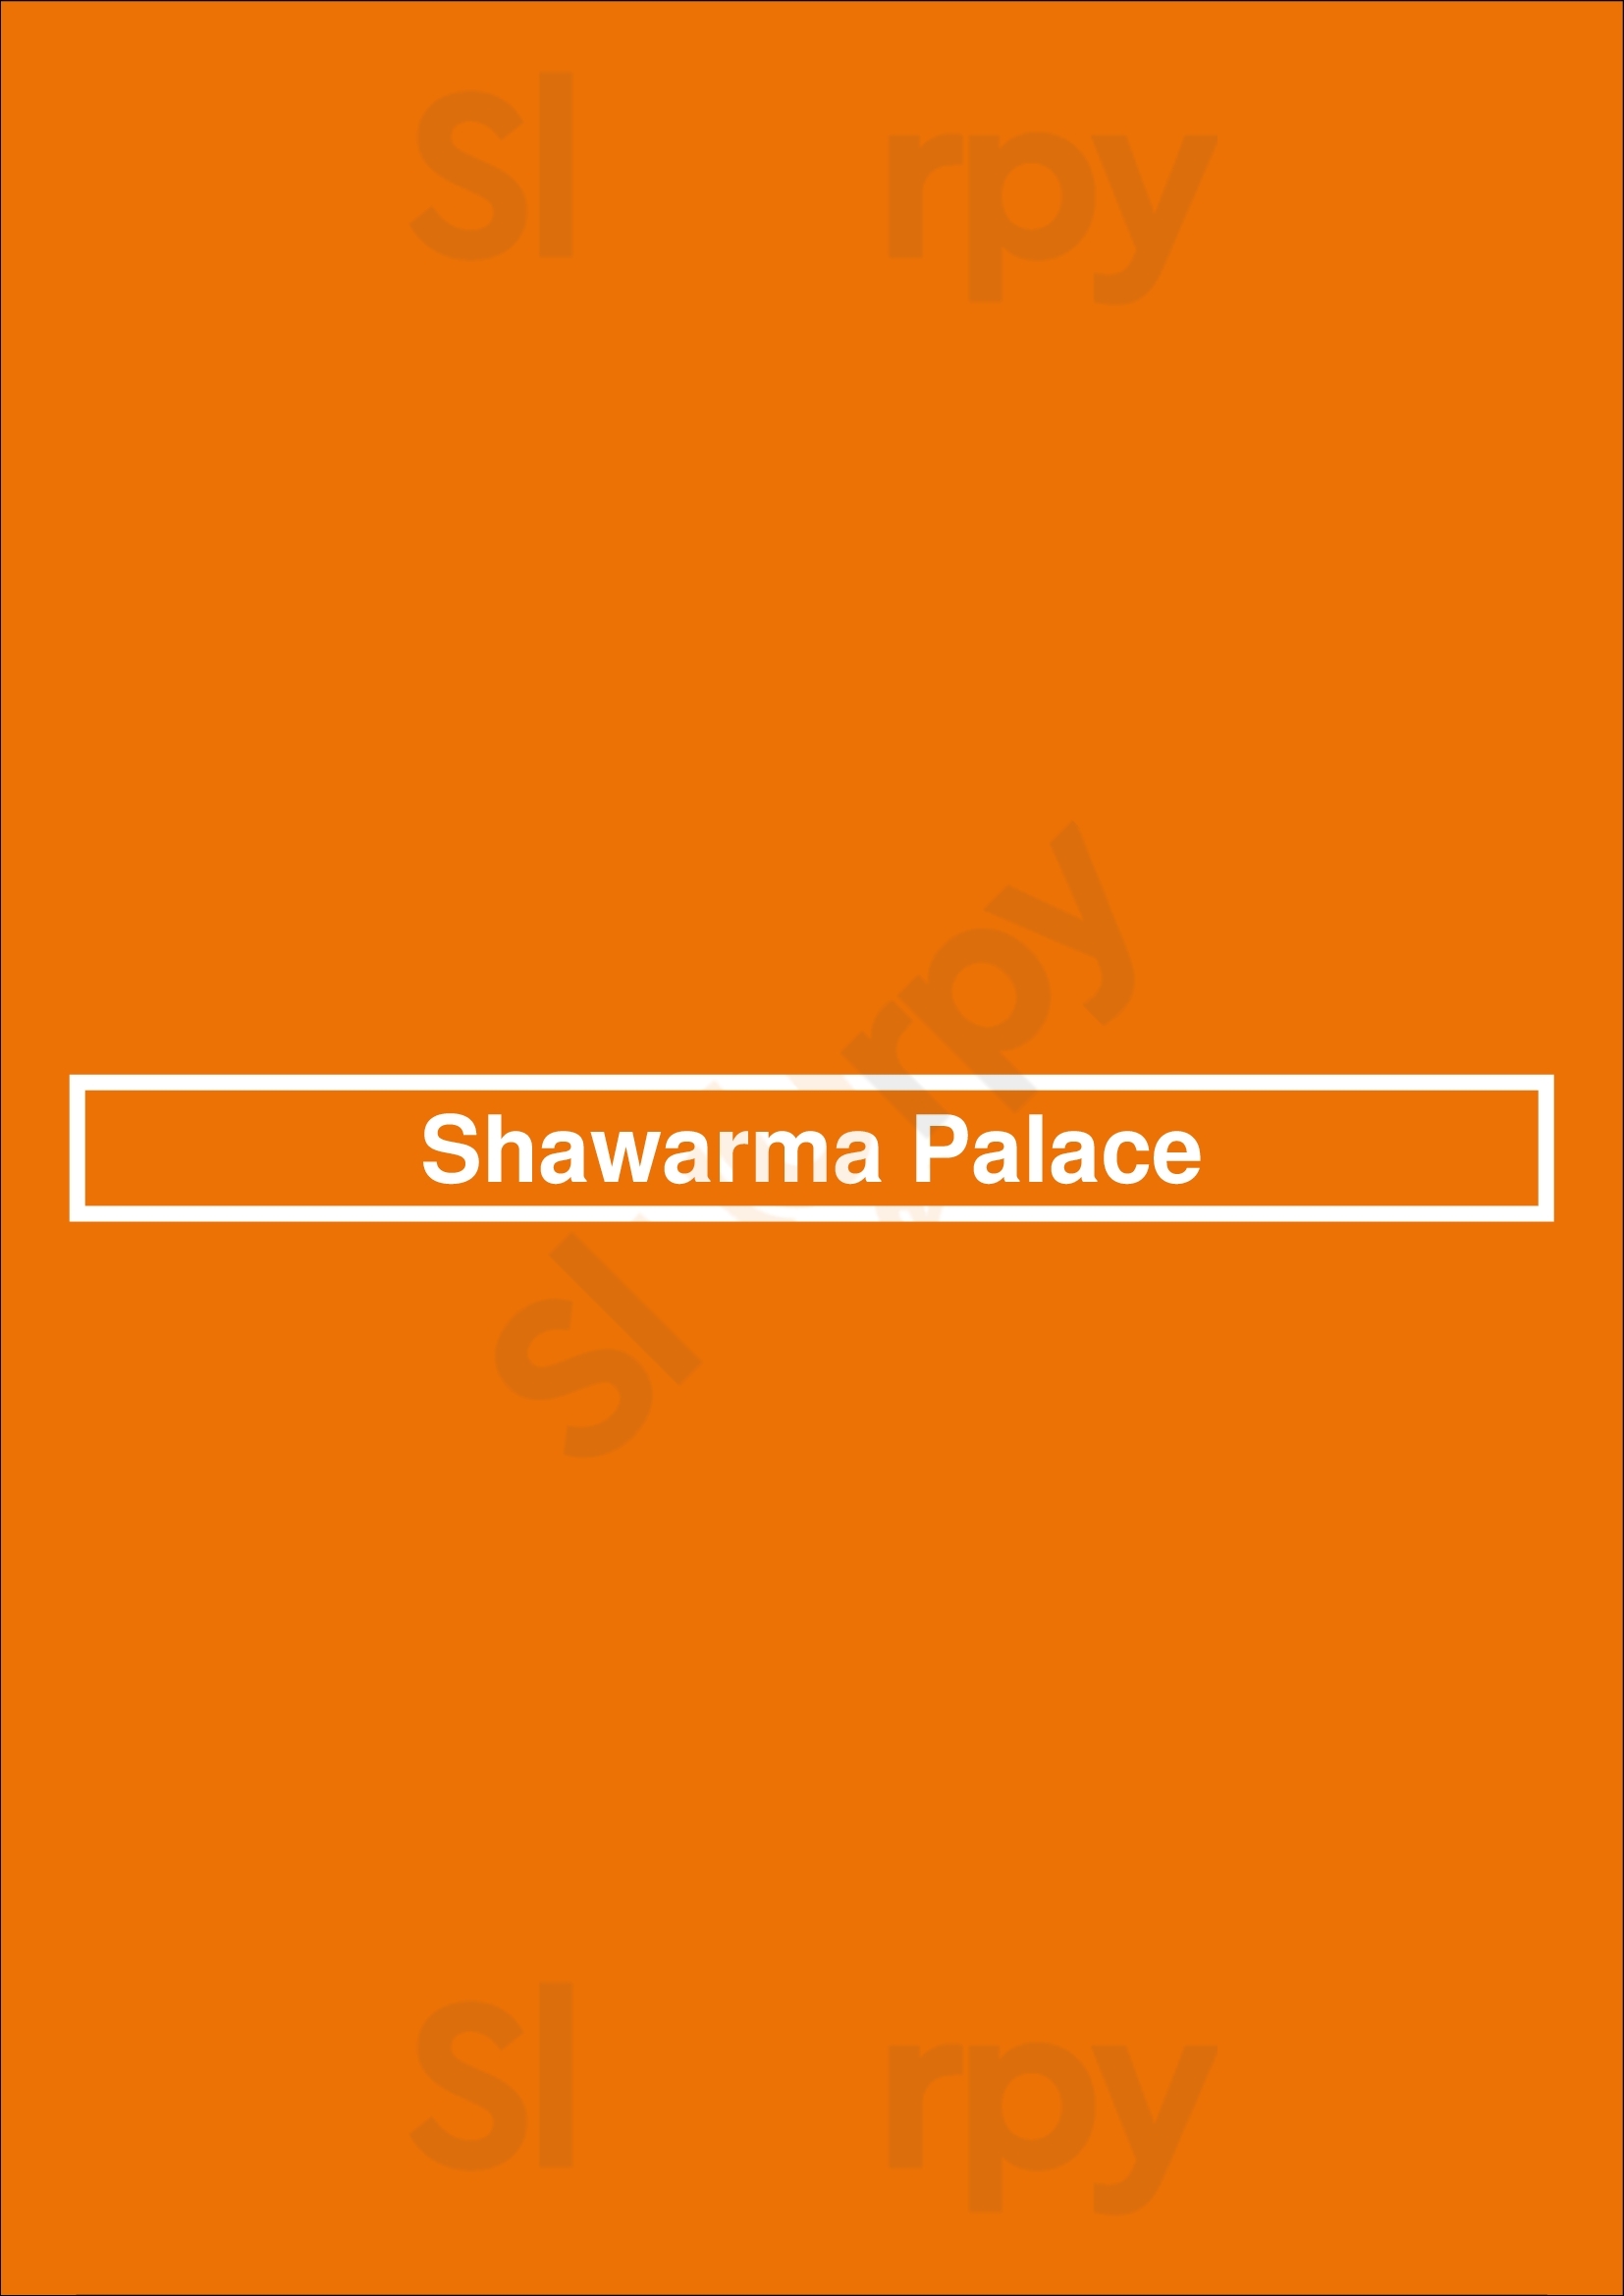 Shawarma Palace Surrey Menu - 1